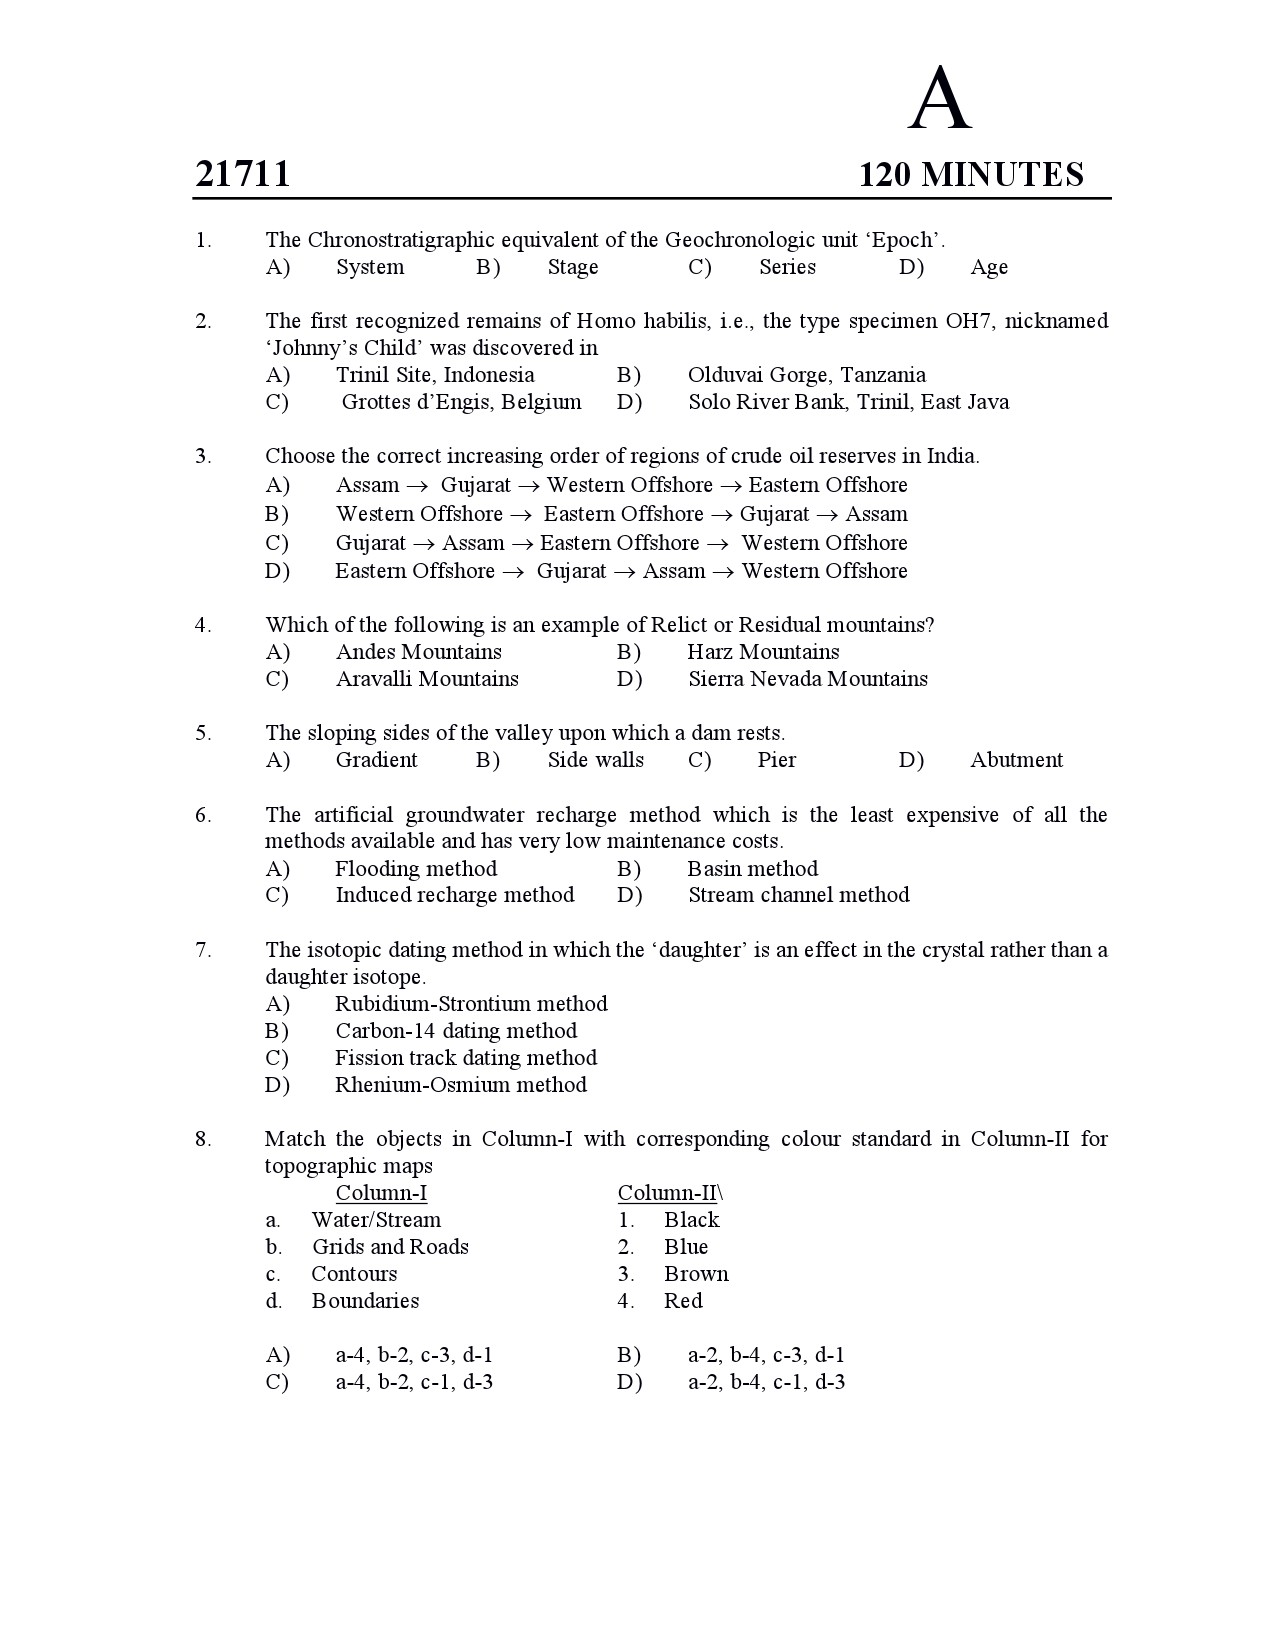 Kerala SET Geology Exam Question Paper July 2021 1